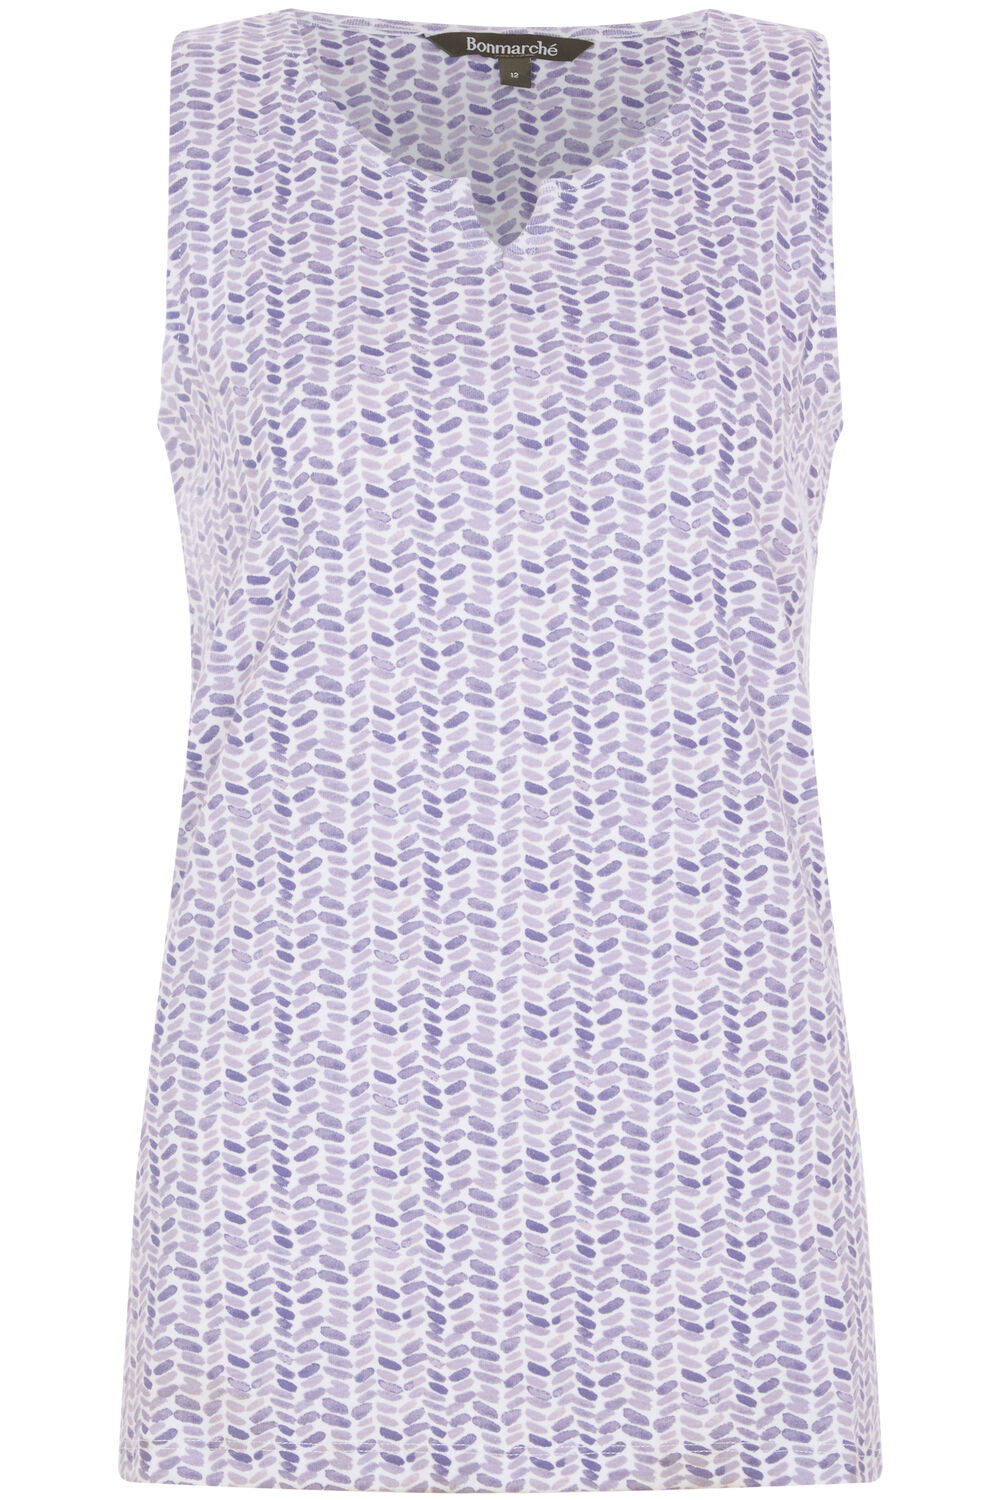 Bonmarche Purple Sleeveless Watercolour Chevron Print Notch Neck Vest, Size: 20